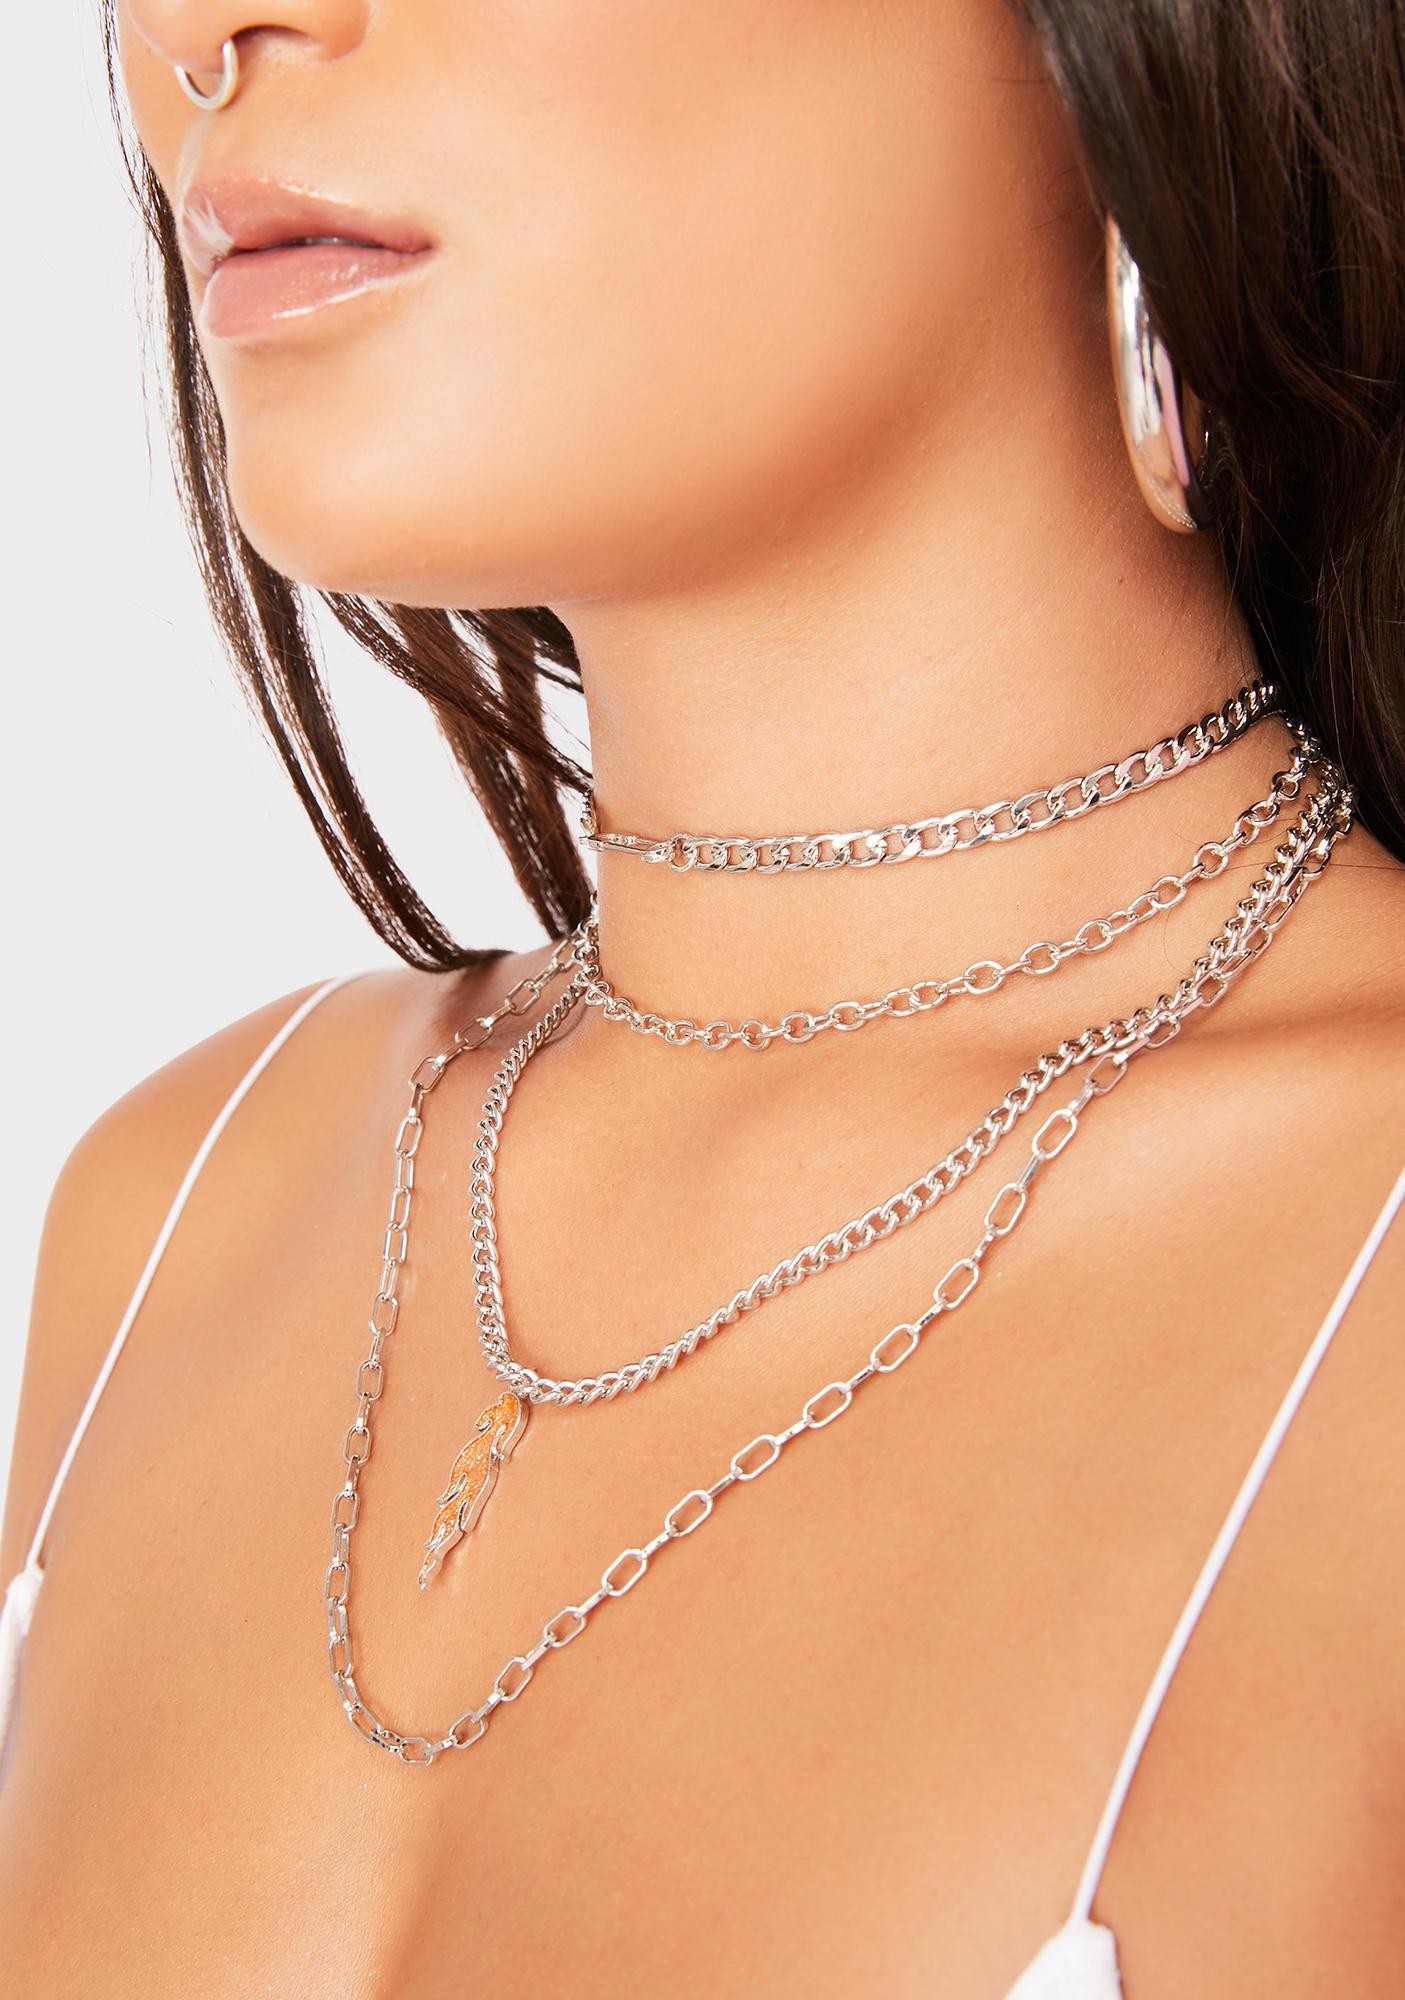 Dainty Boho Chain Necklace Set Of 3 